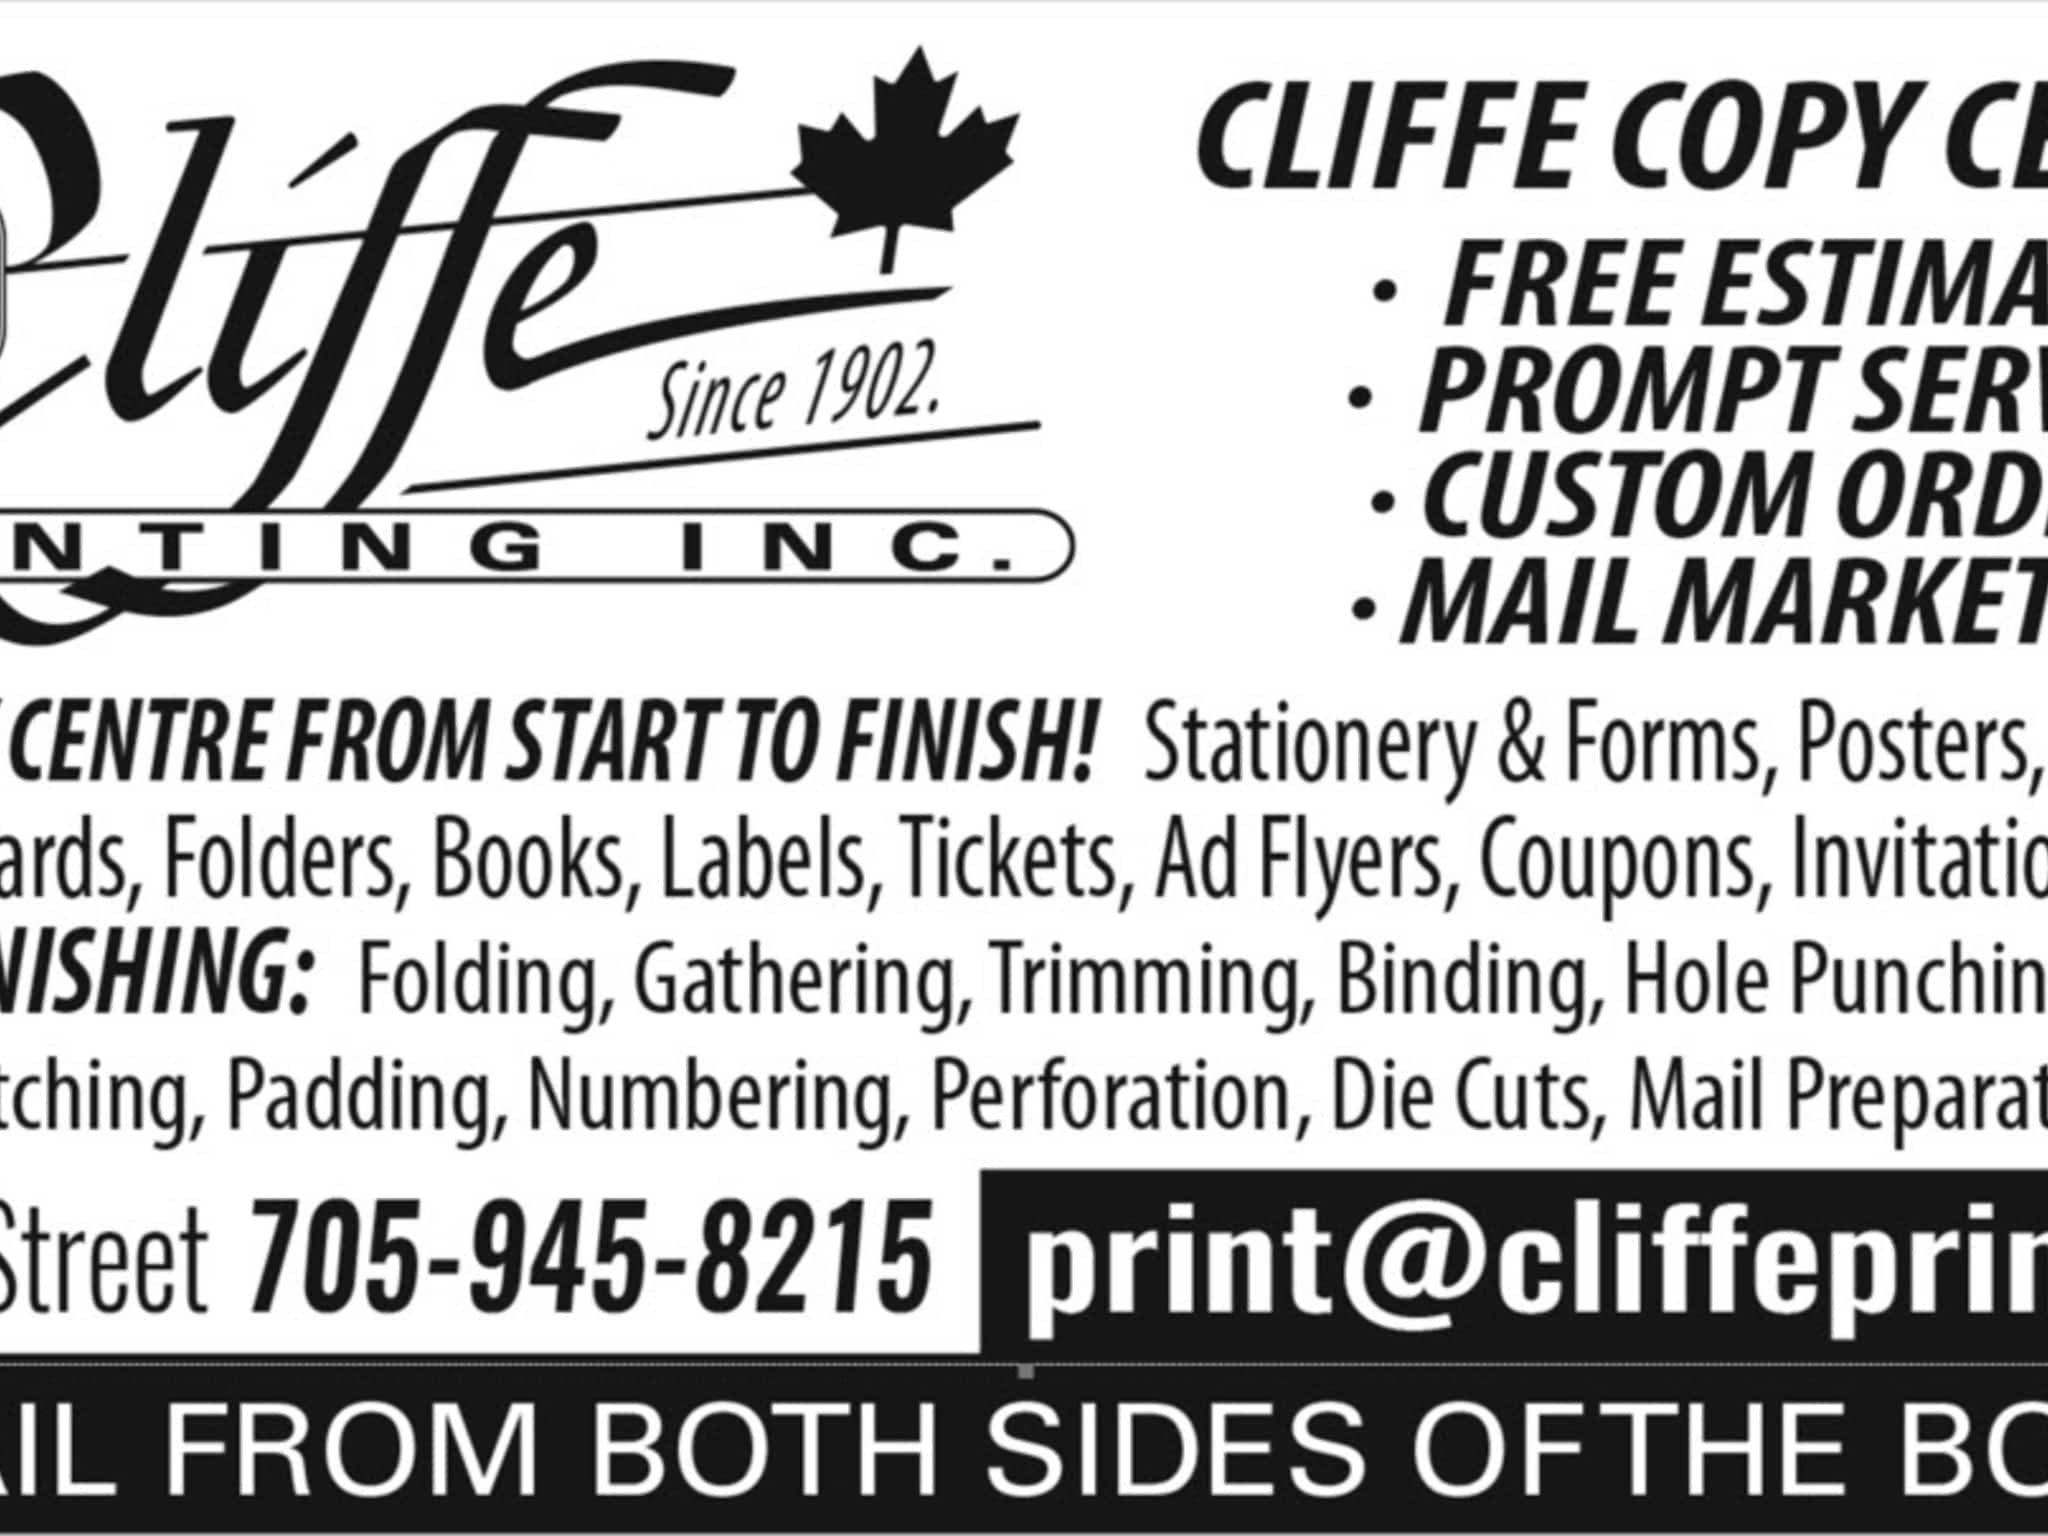 photo Cliffe Printing Inc